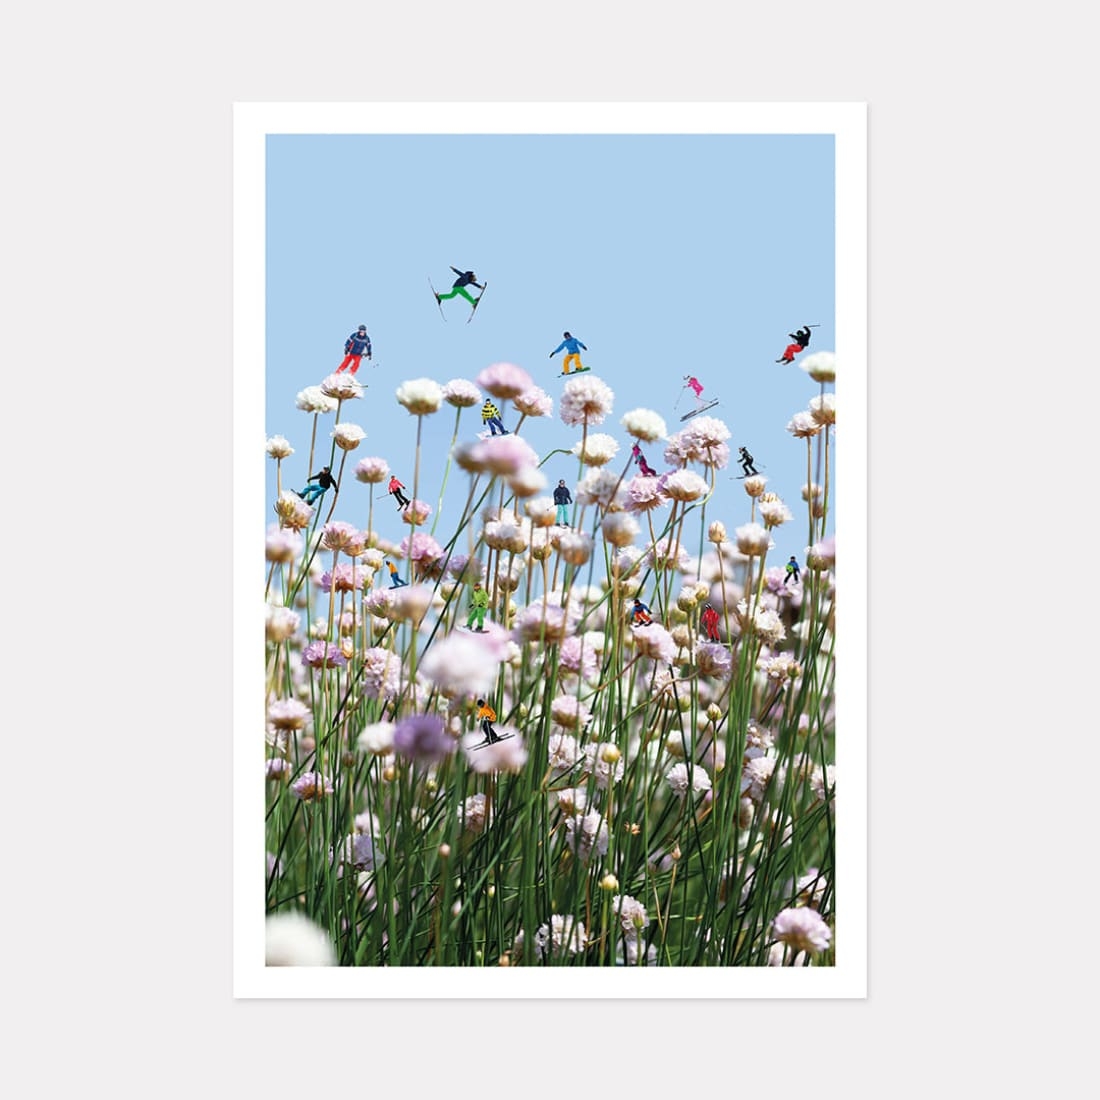 Flowerski Art Print, A2 (59.4cm x 42cm) unframed print – Powderhound